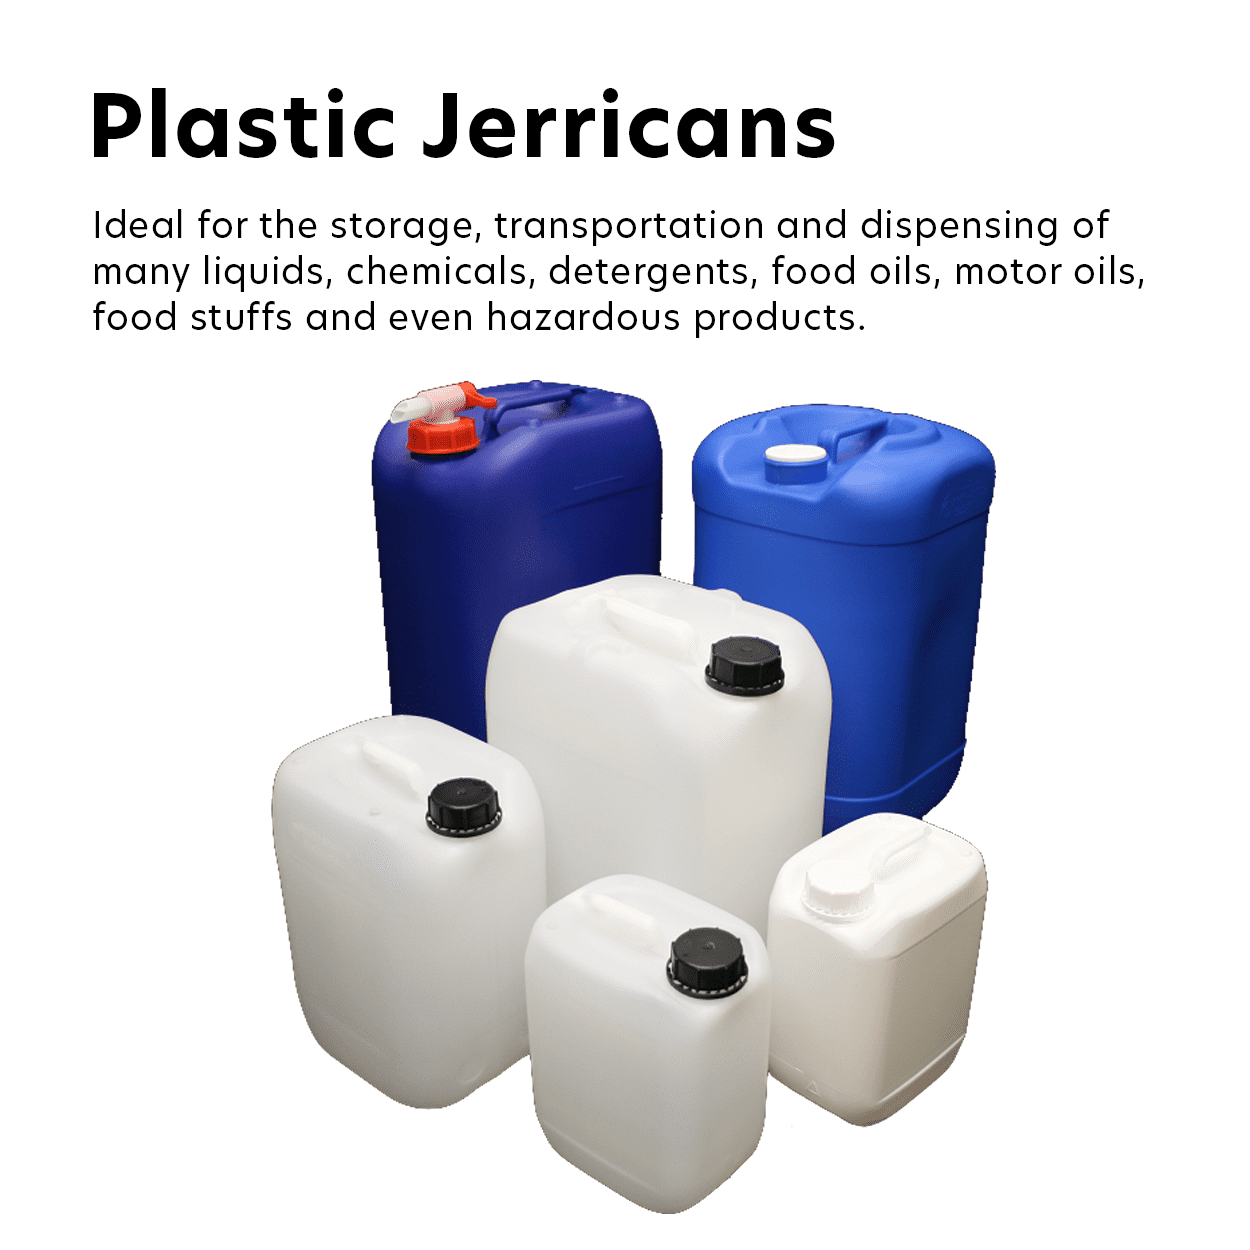 Plastic Jerricans